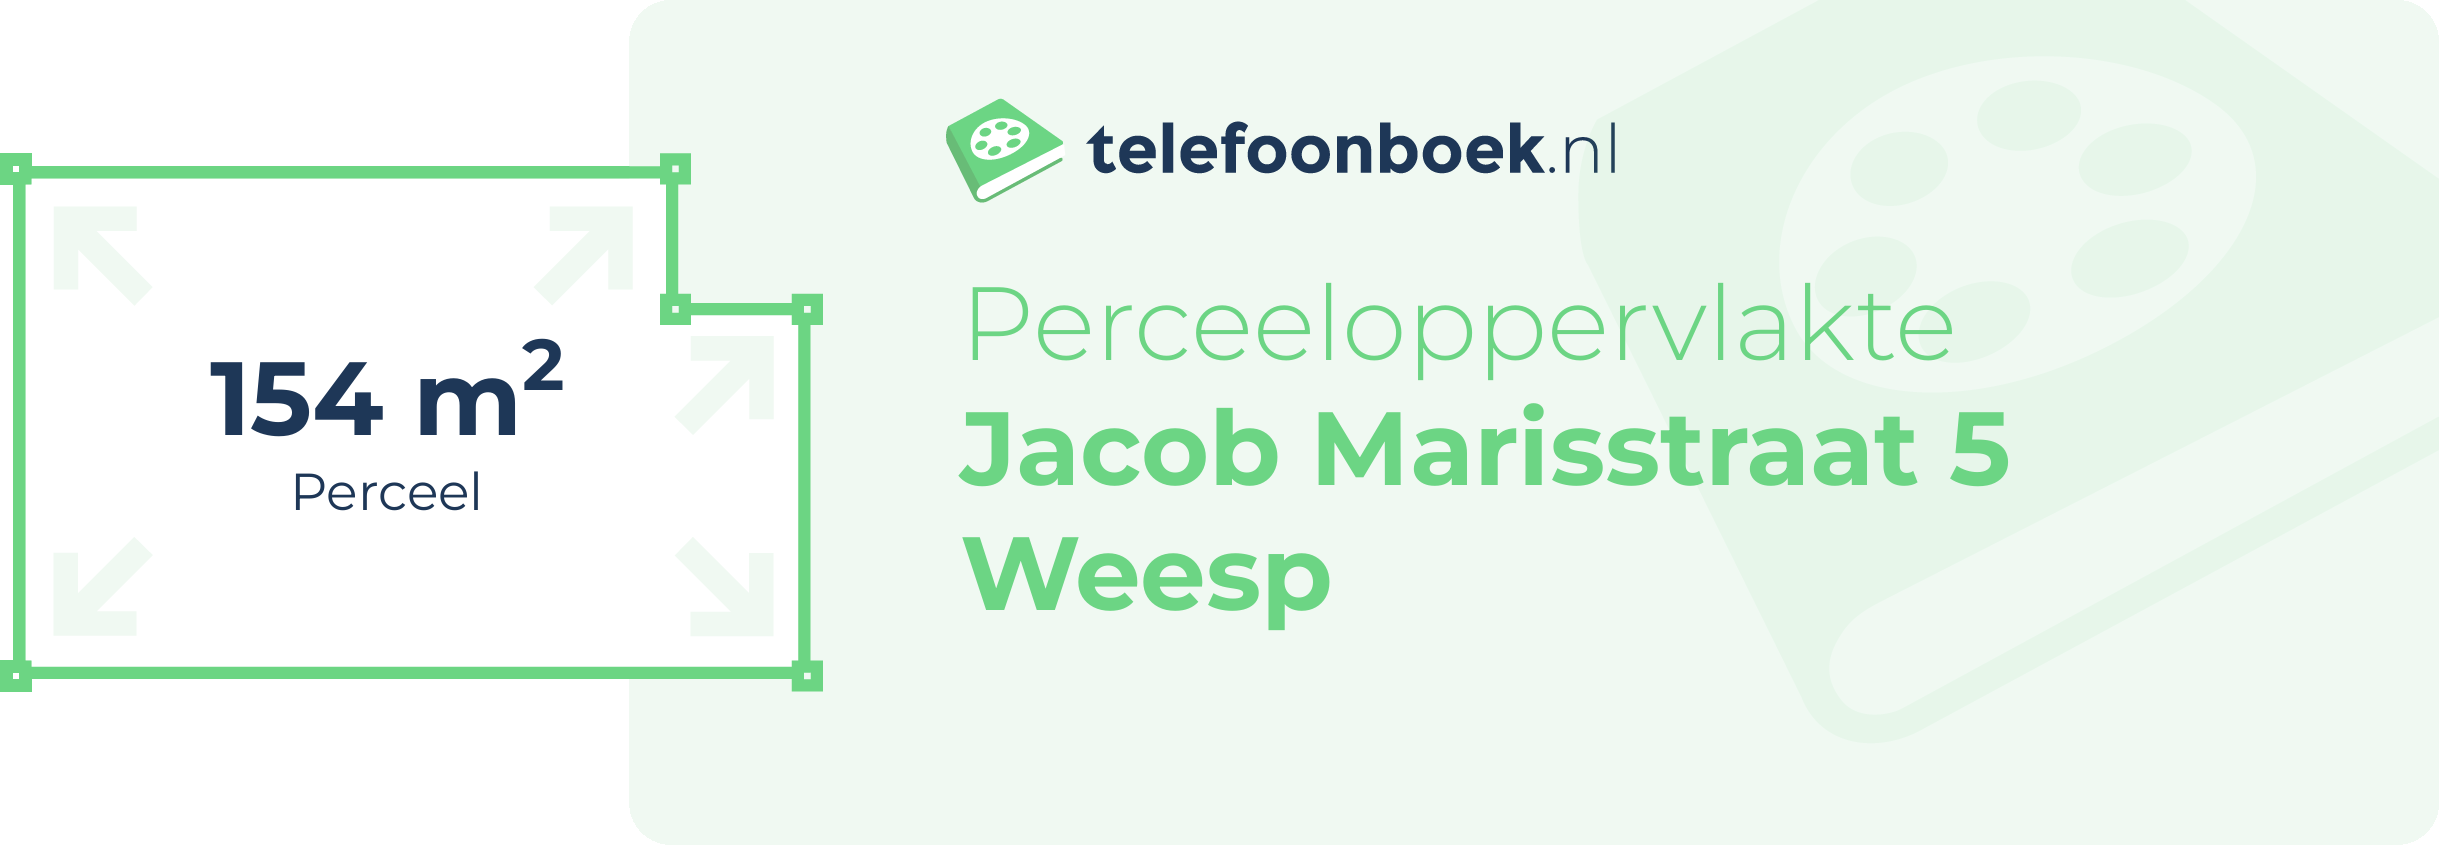 Perceeloppervlakte Jacob Marisstraat 5 Weesp